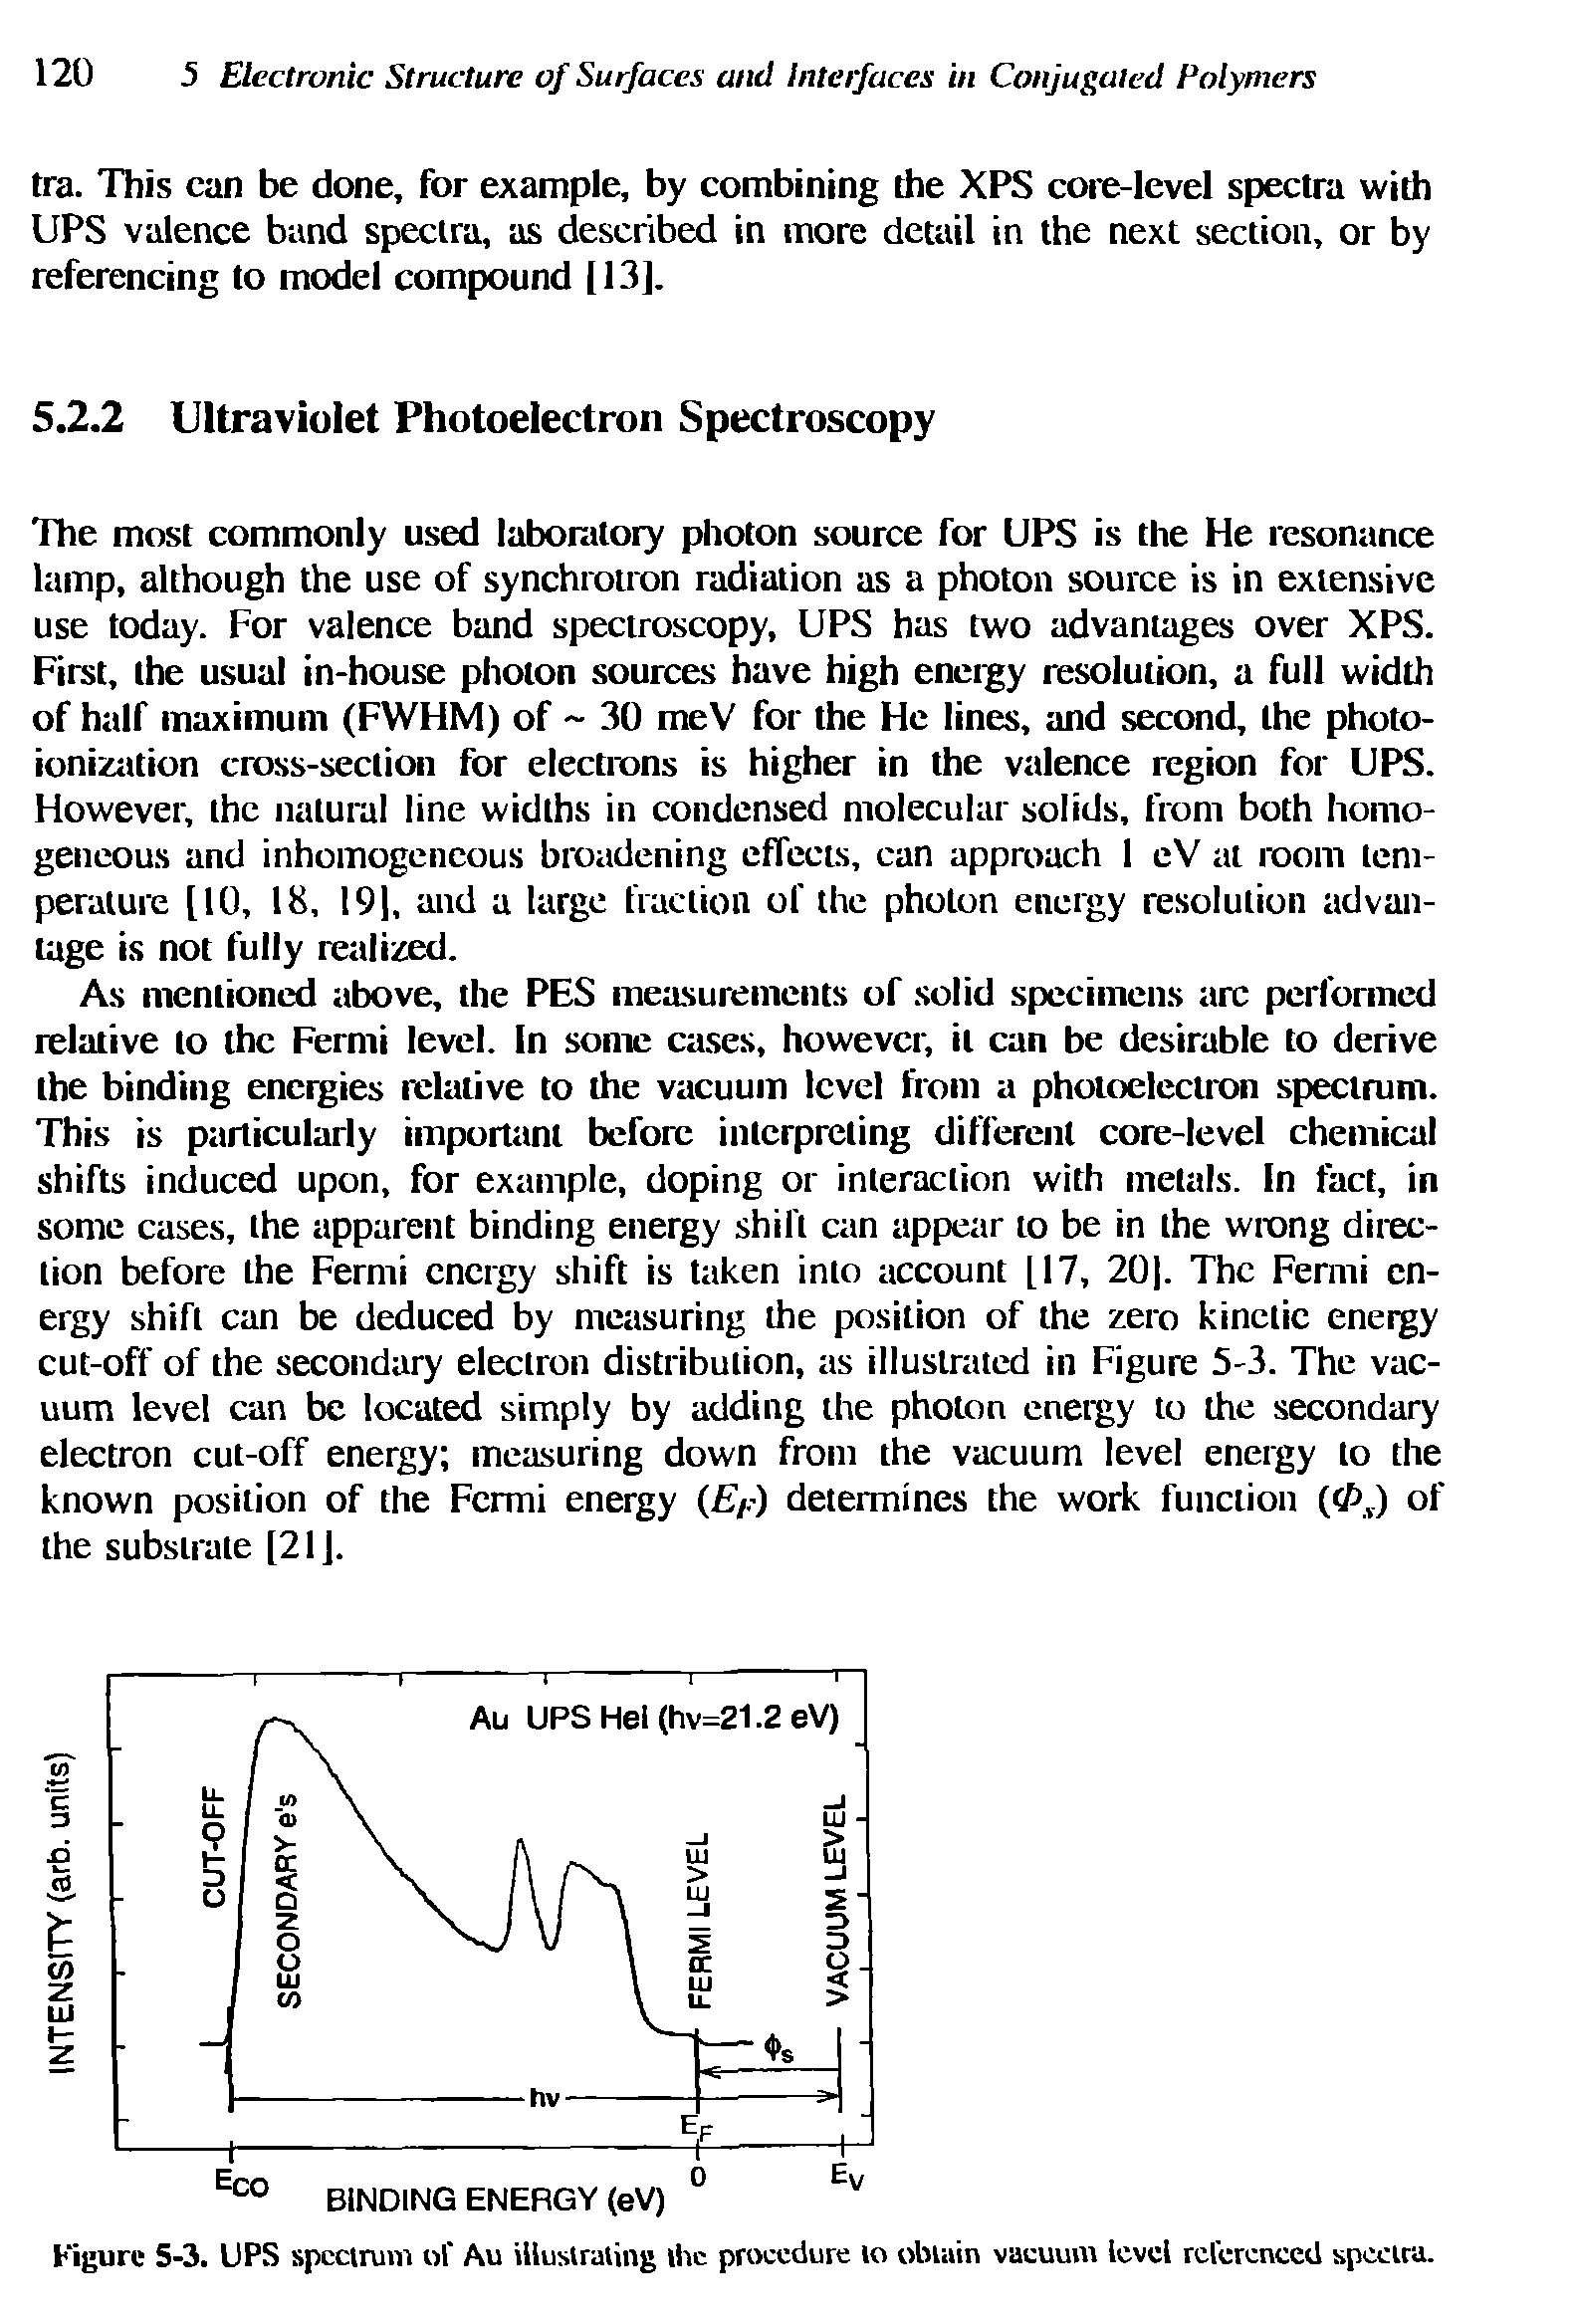 Figure 5-3. UPS spectrum of Au illustrating the procedure to obtain vacuum level referenced spectra.